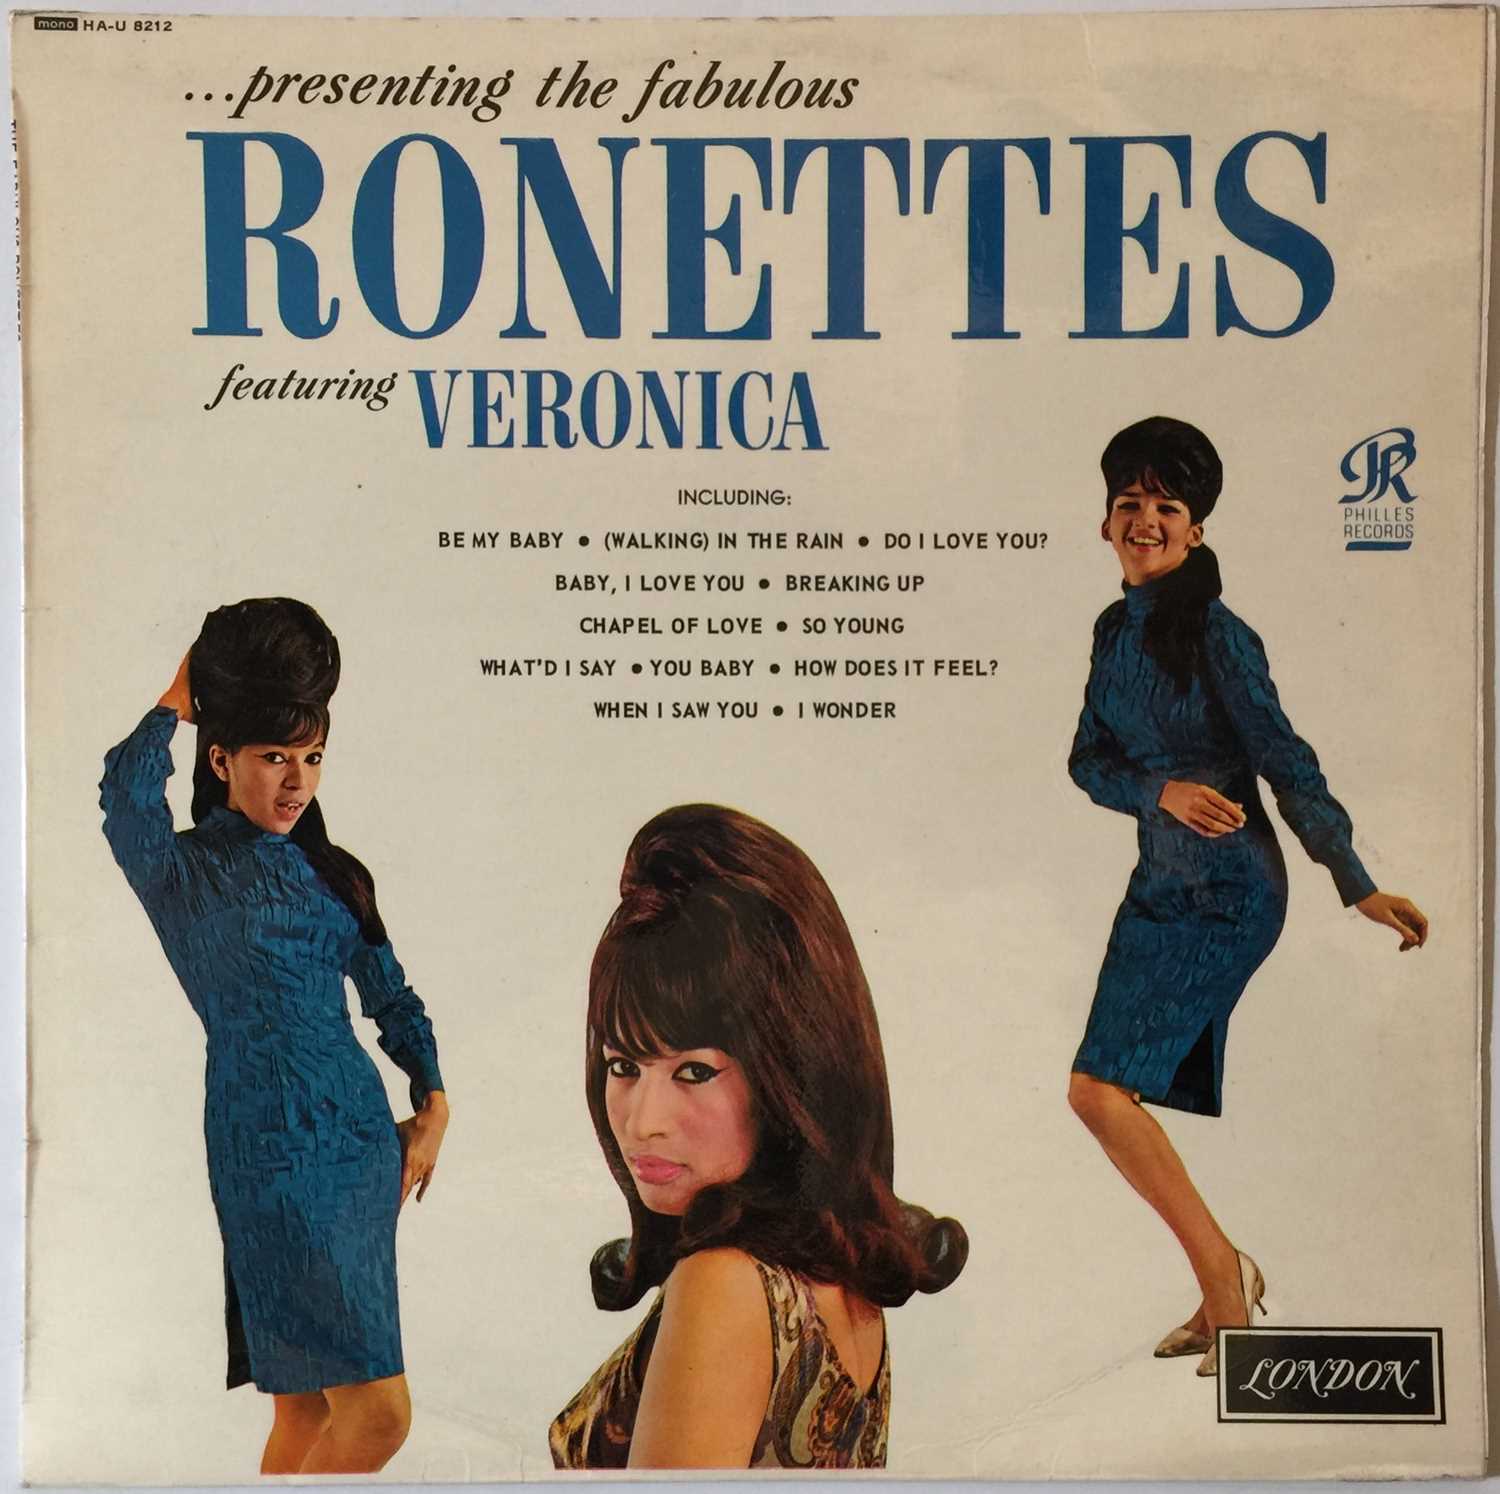 THE RONETTES - PRESENTING THE FABULOUS RONETTES LP (ORIGINAL UK COPY - LONDON HA-U 8212) - Image 2 of 5